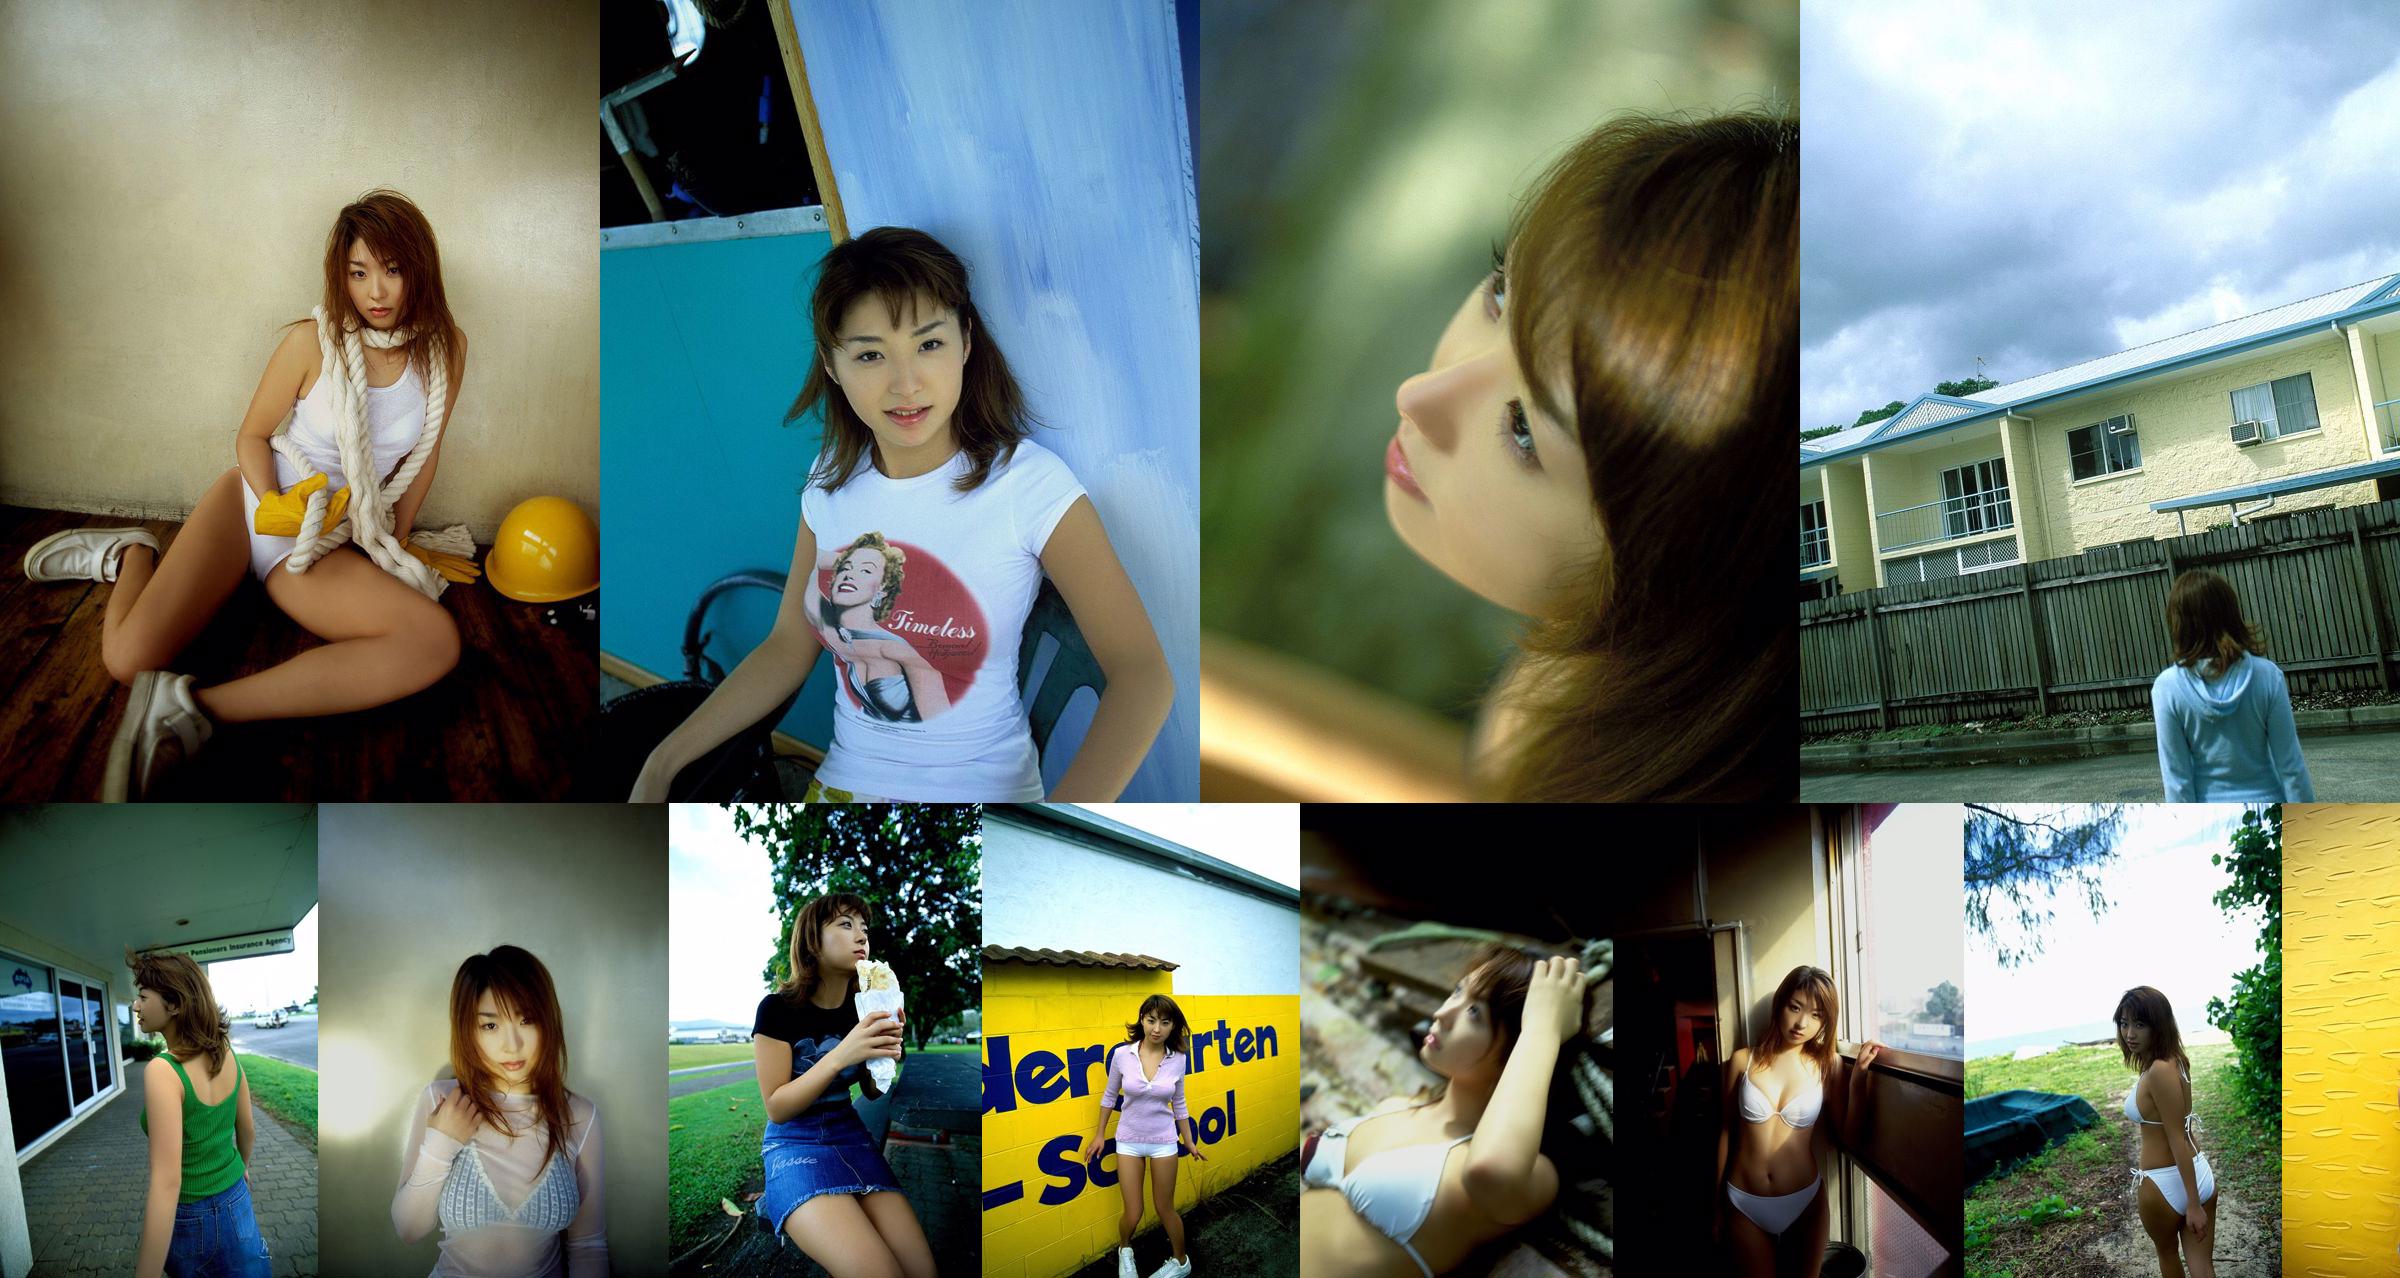 Mayu Watanabe Suzuran Yamauchi [Salto Joven Semanal] 2011 Revista fotográfica No 27 No.1f9fed Página 15